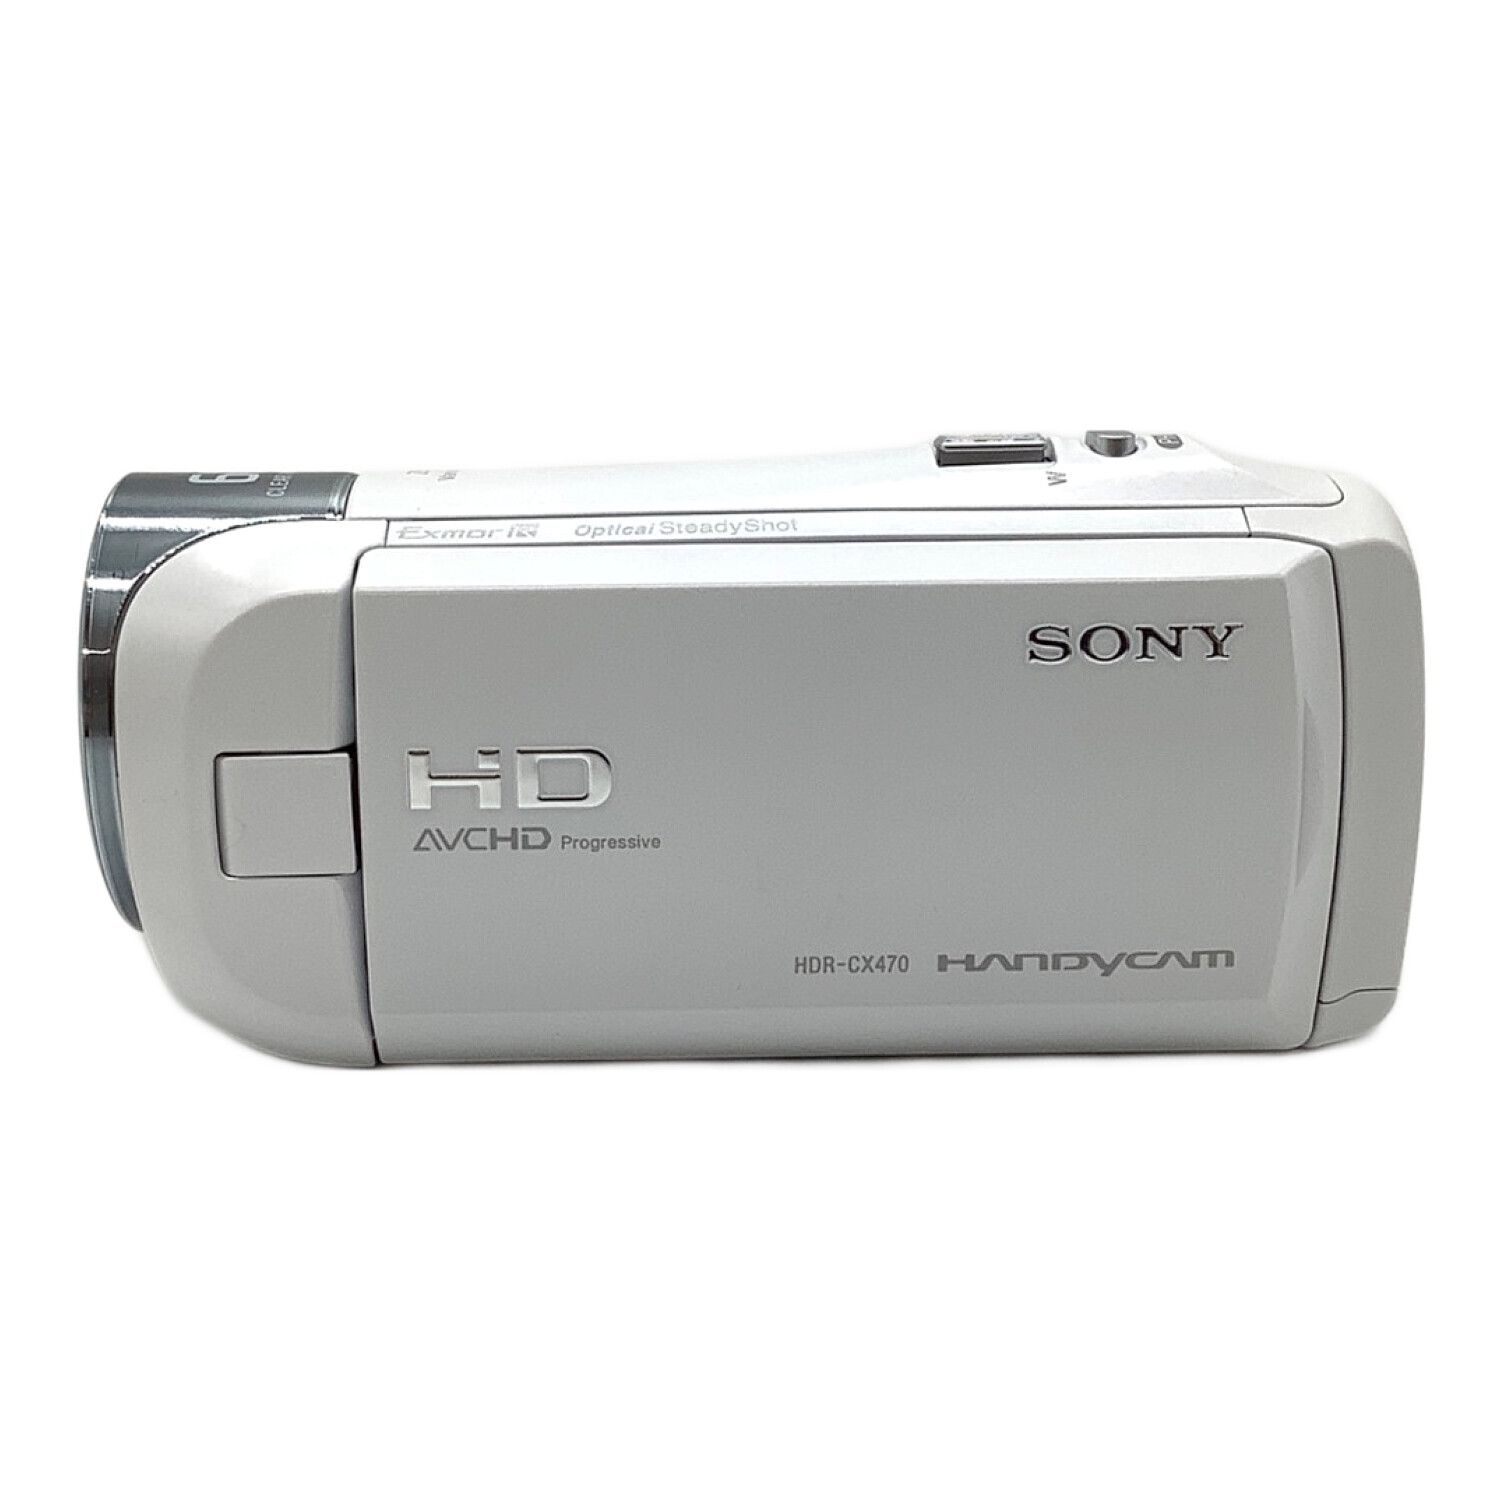 SONY (ソニー) デジタルビデオカメラ 229万画素 microSDカード対応 HDR 